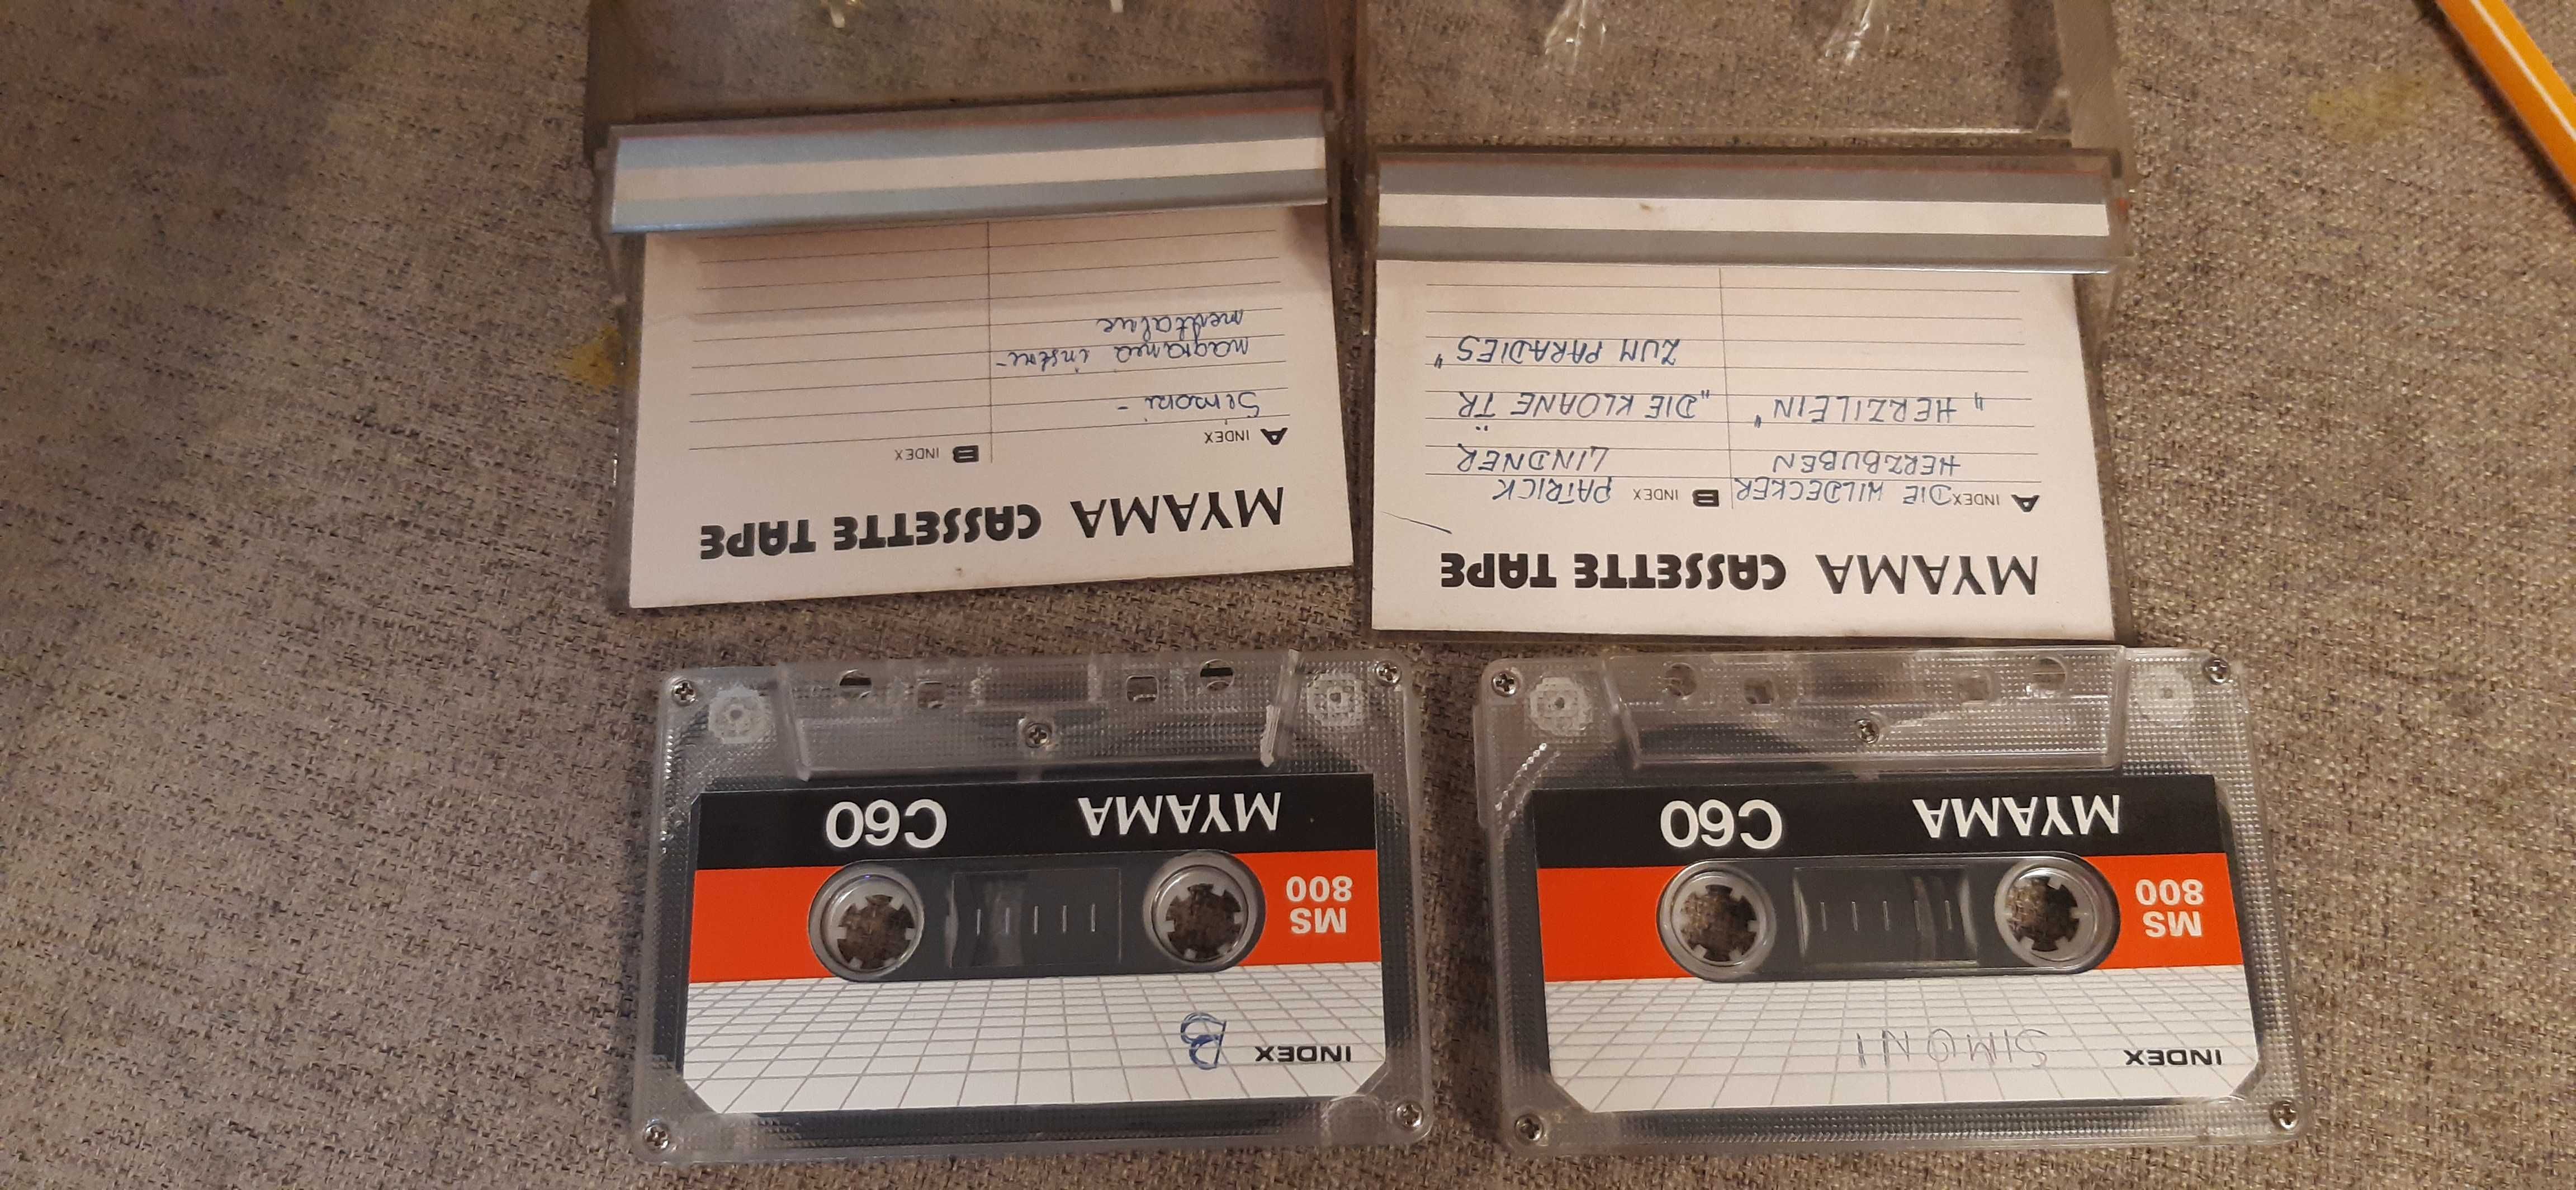 2 kasety magnetofonowe mayama c60 ms800 dla kolekcjonerów